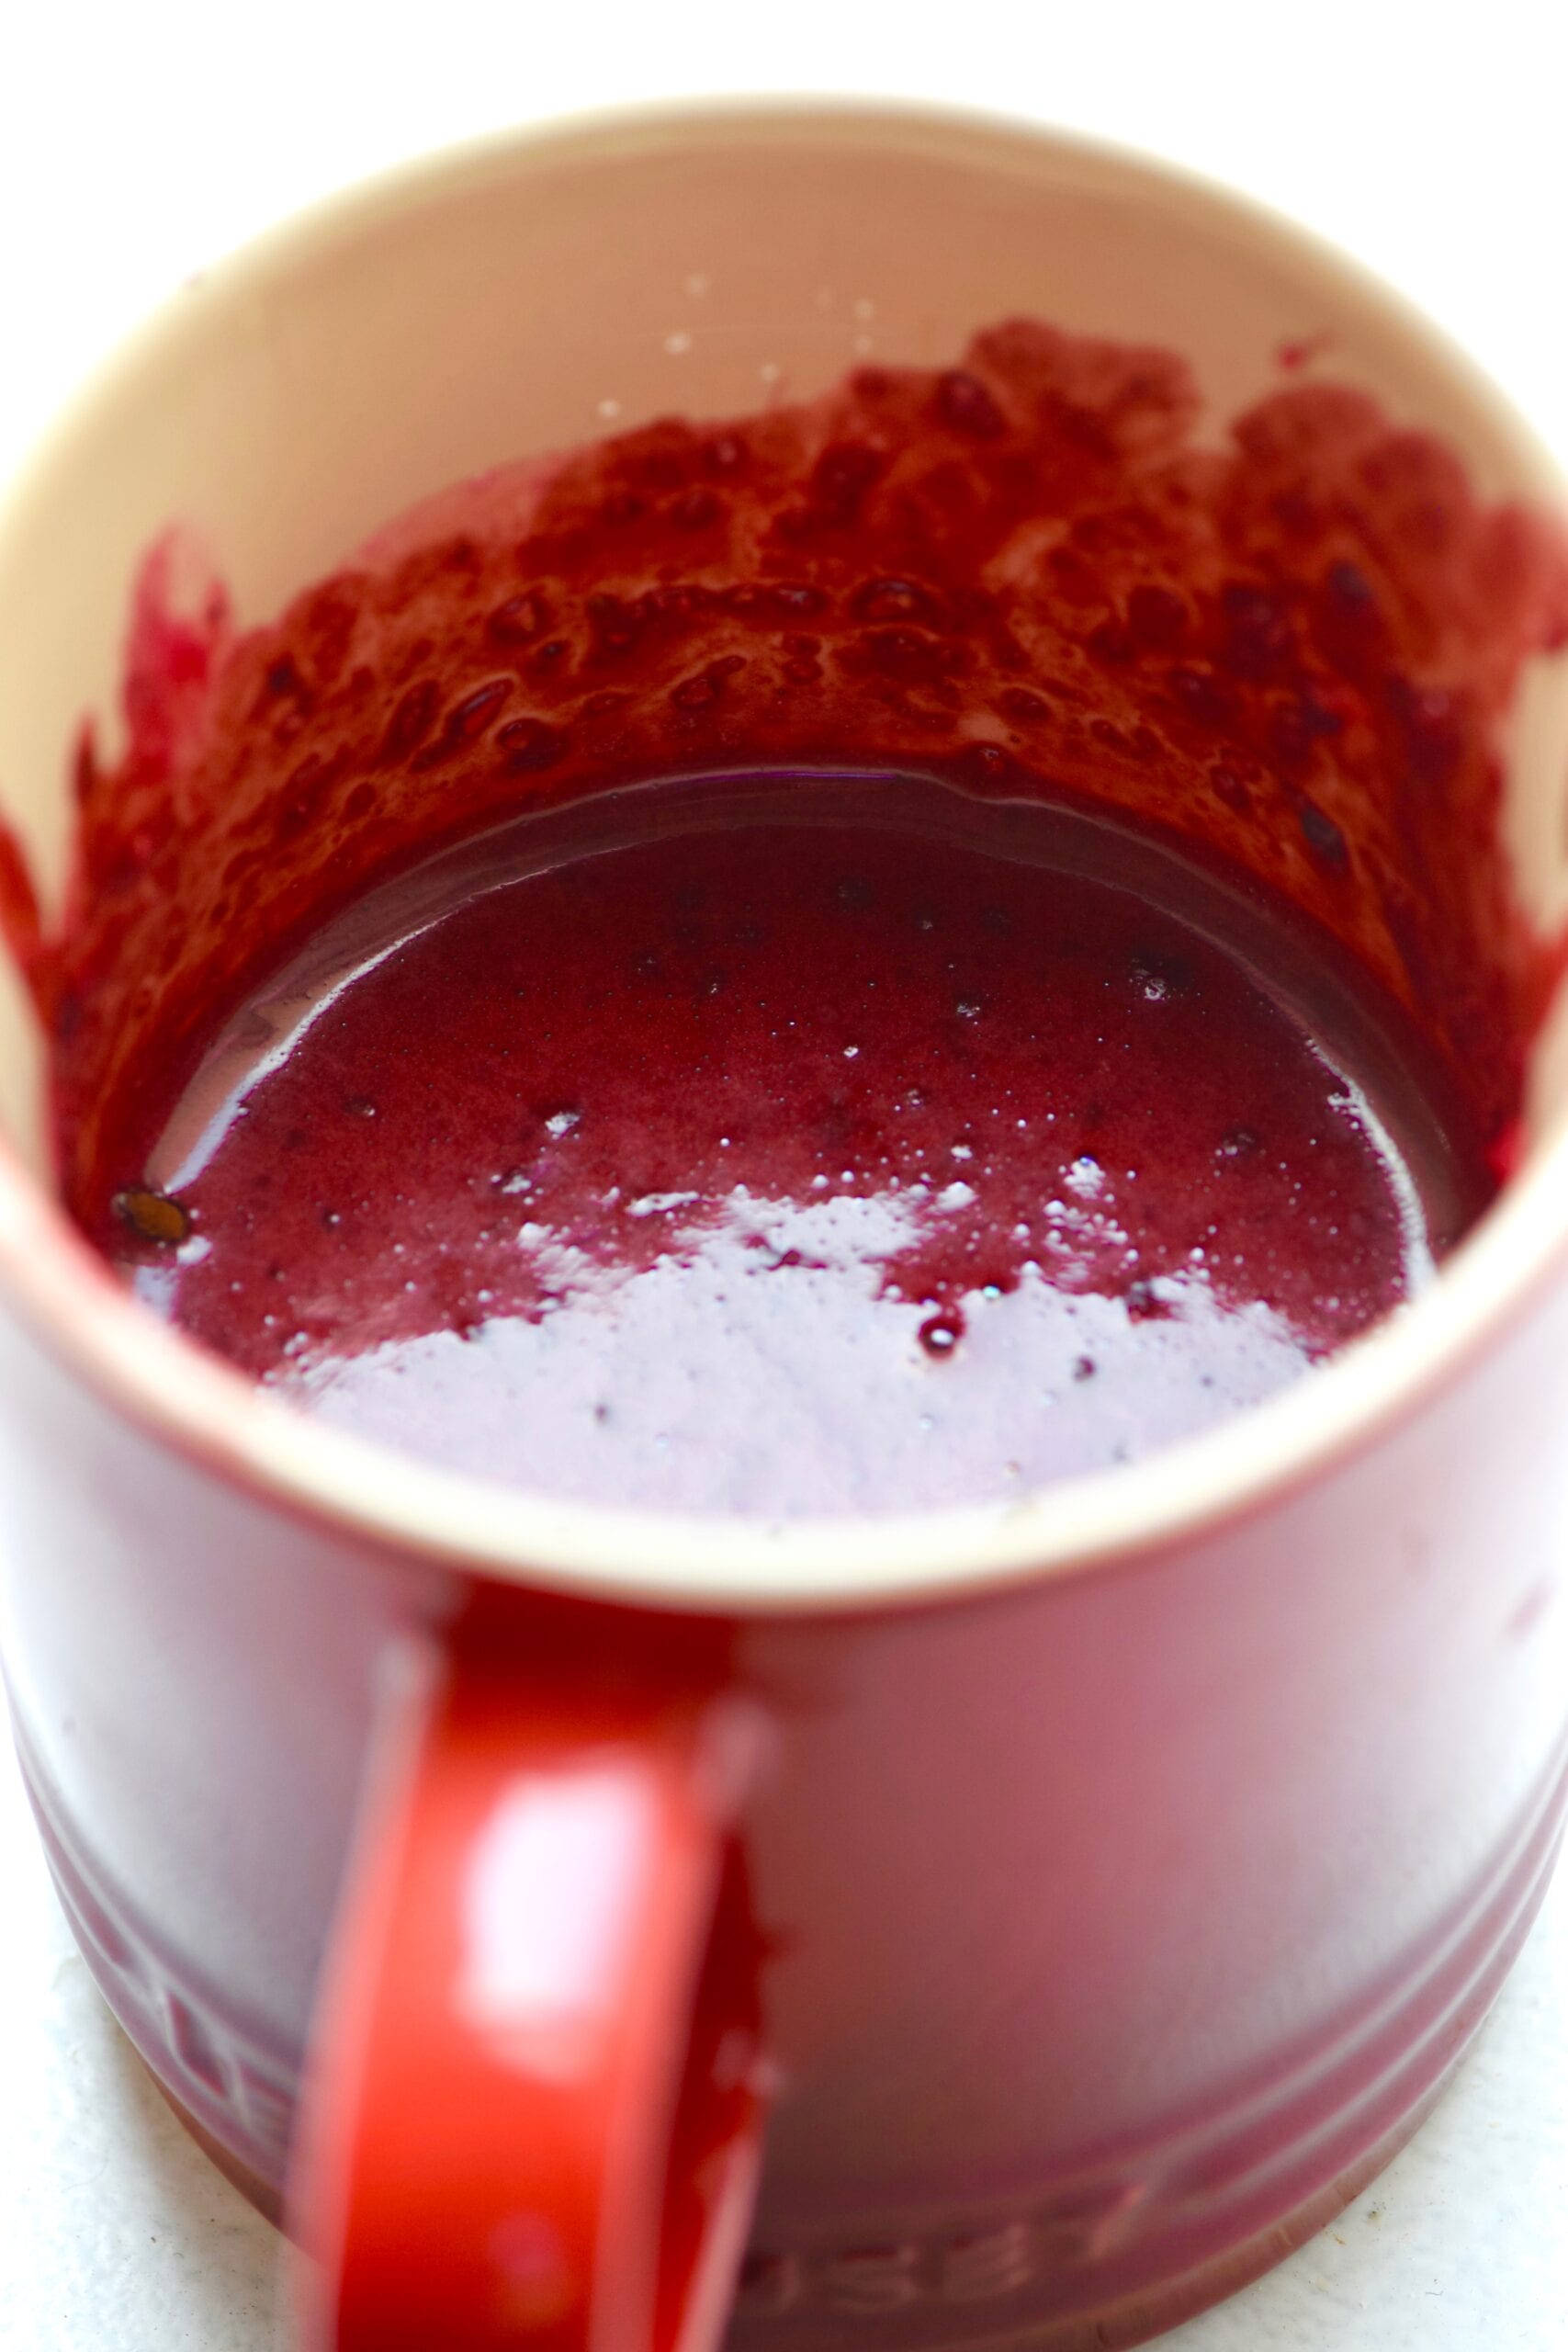 Mixing all ingredients for the red velvet mug cake